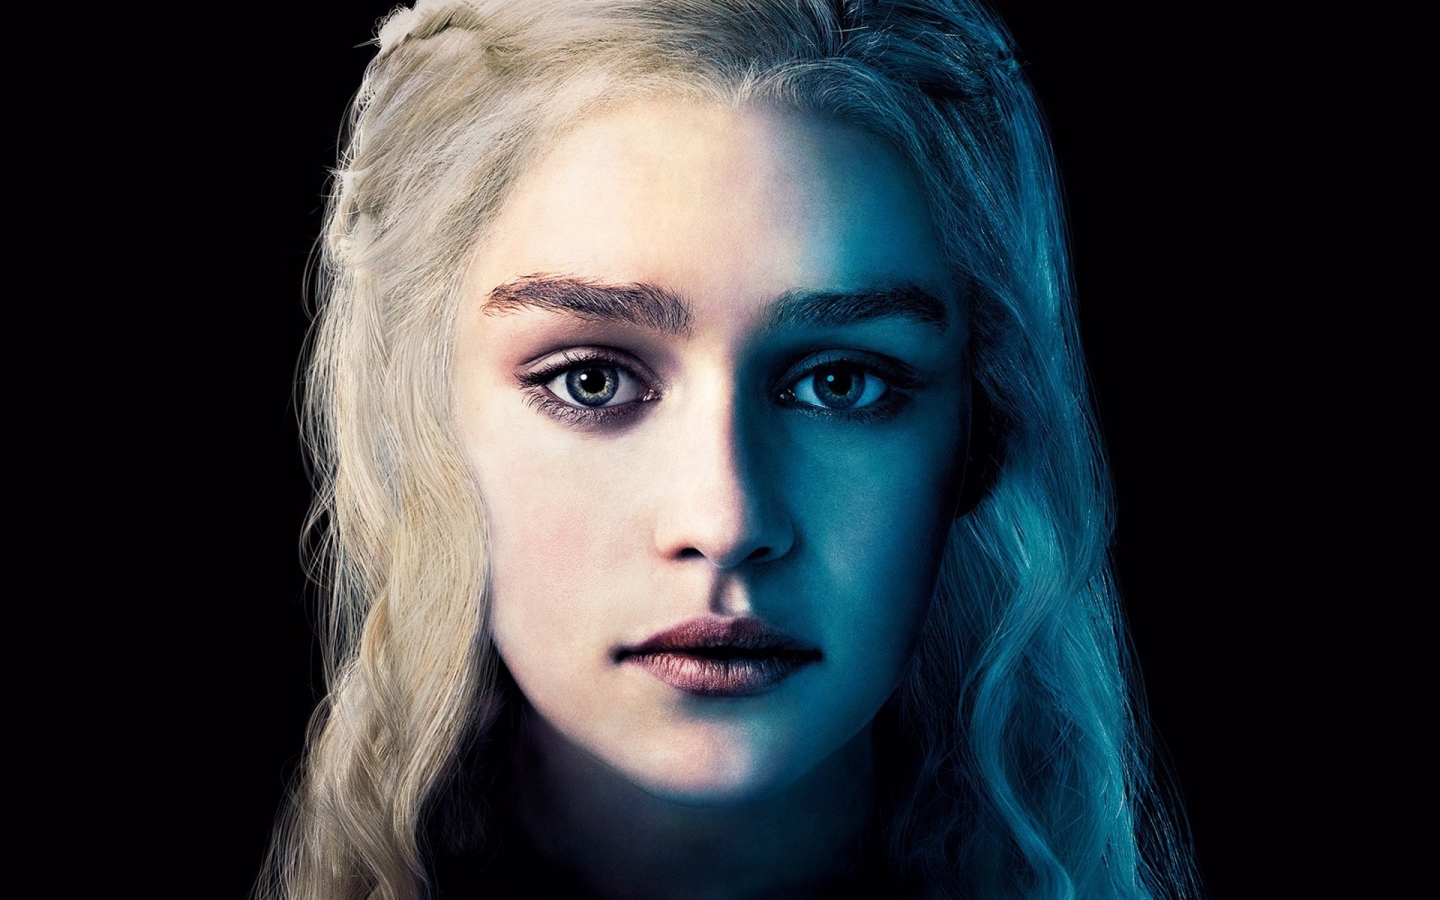 Daenerys Targaryen for 1440 x 900 widescreen resolution